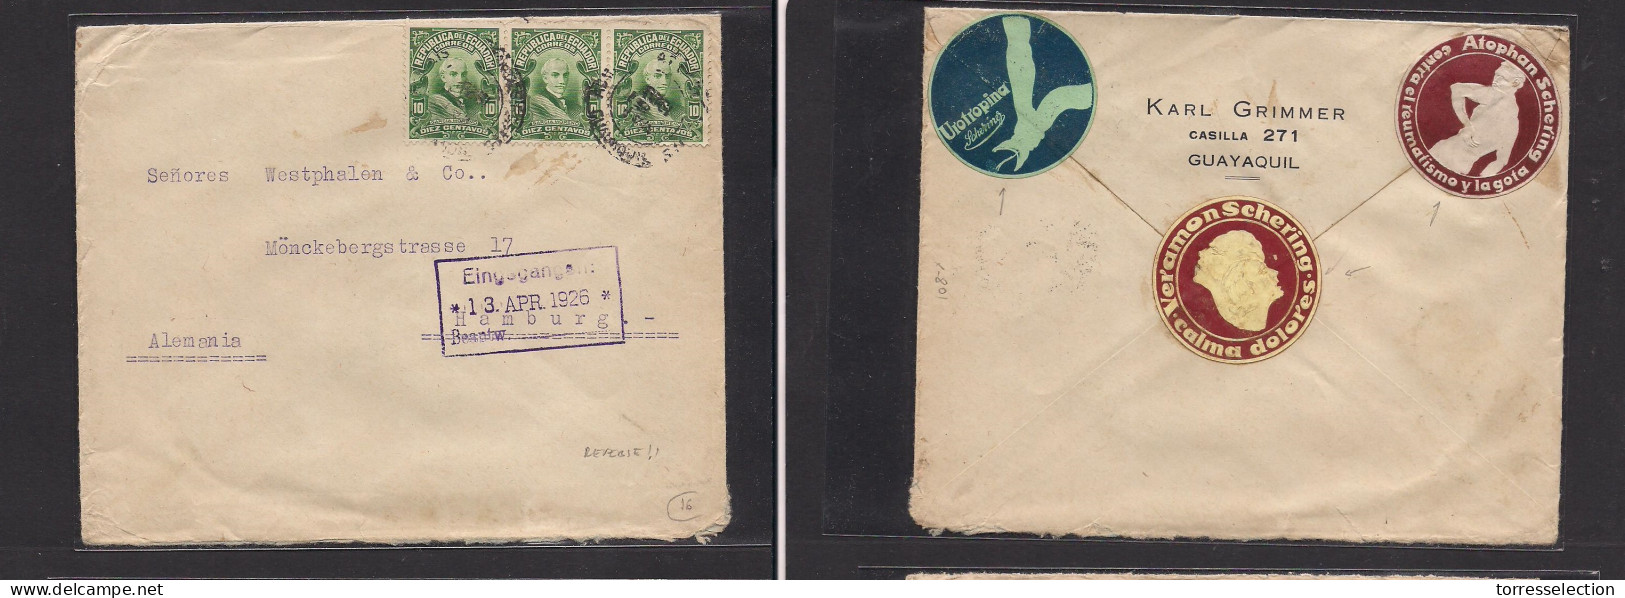 ECUADOR. Ecuador - Cover - 1926 Guayaquil To Germany Mult Fkd Env. Easy Deal. XSALE. - Ecuador